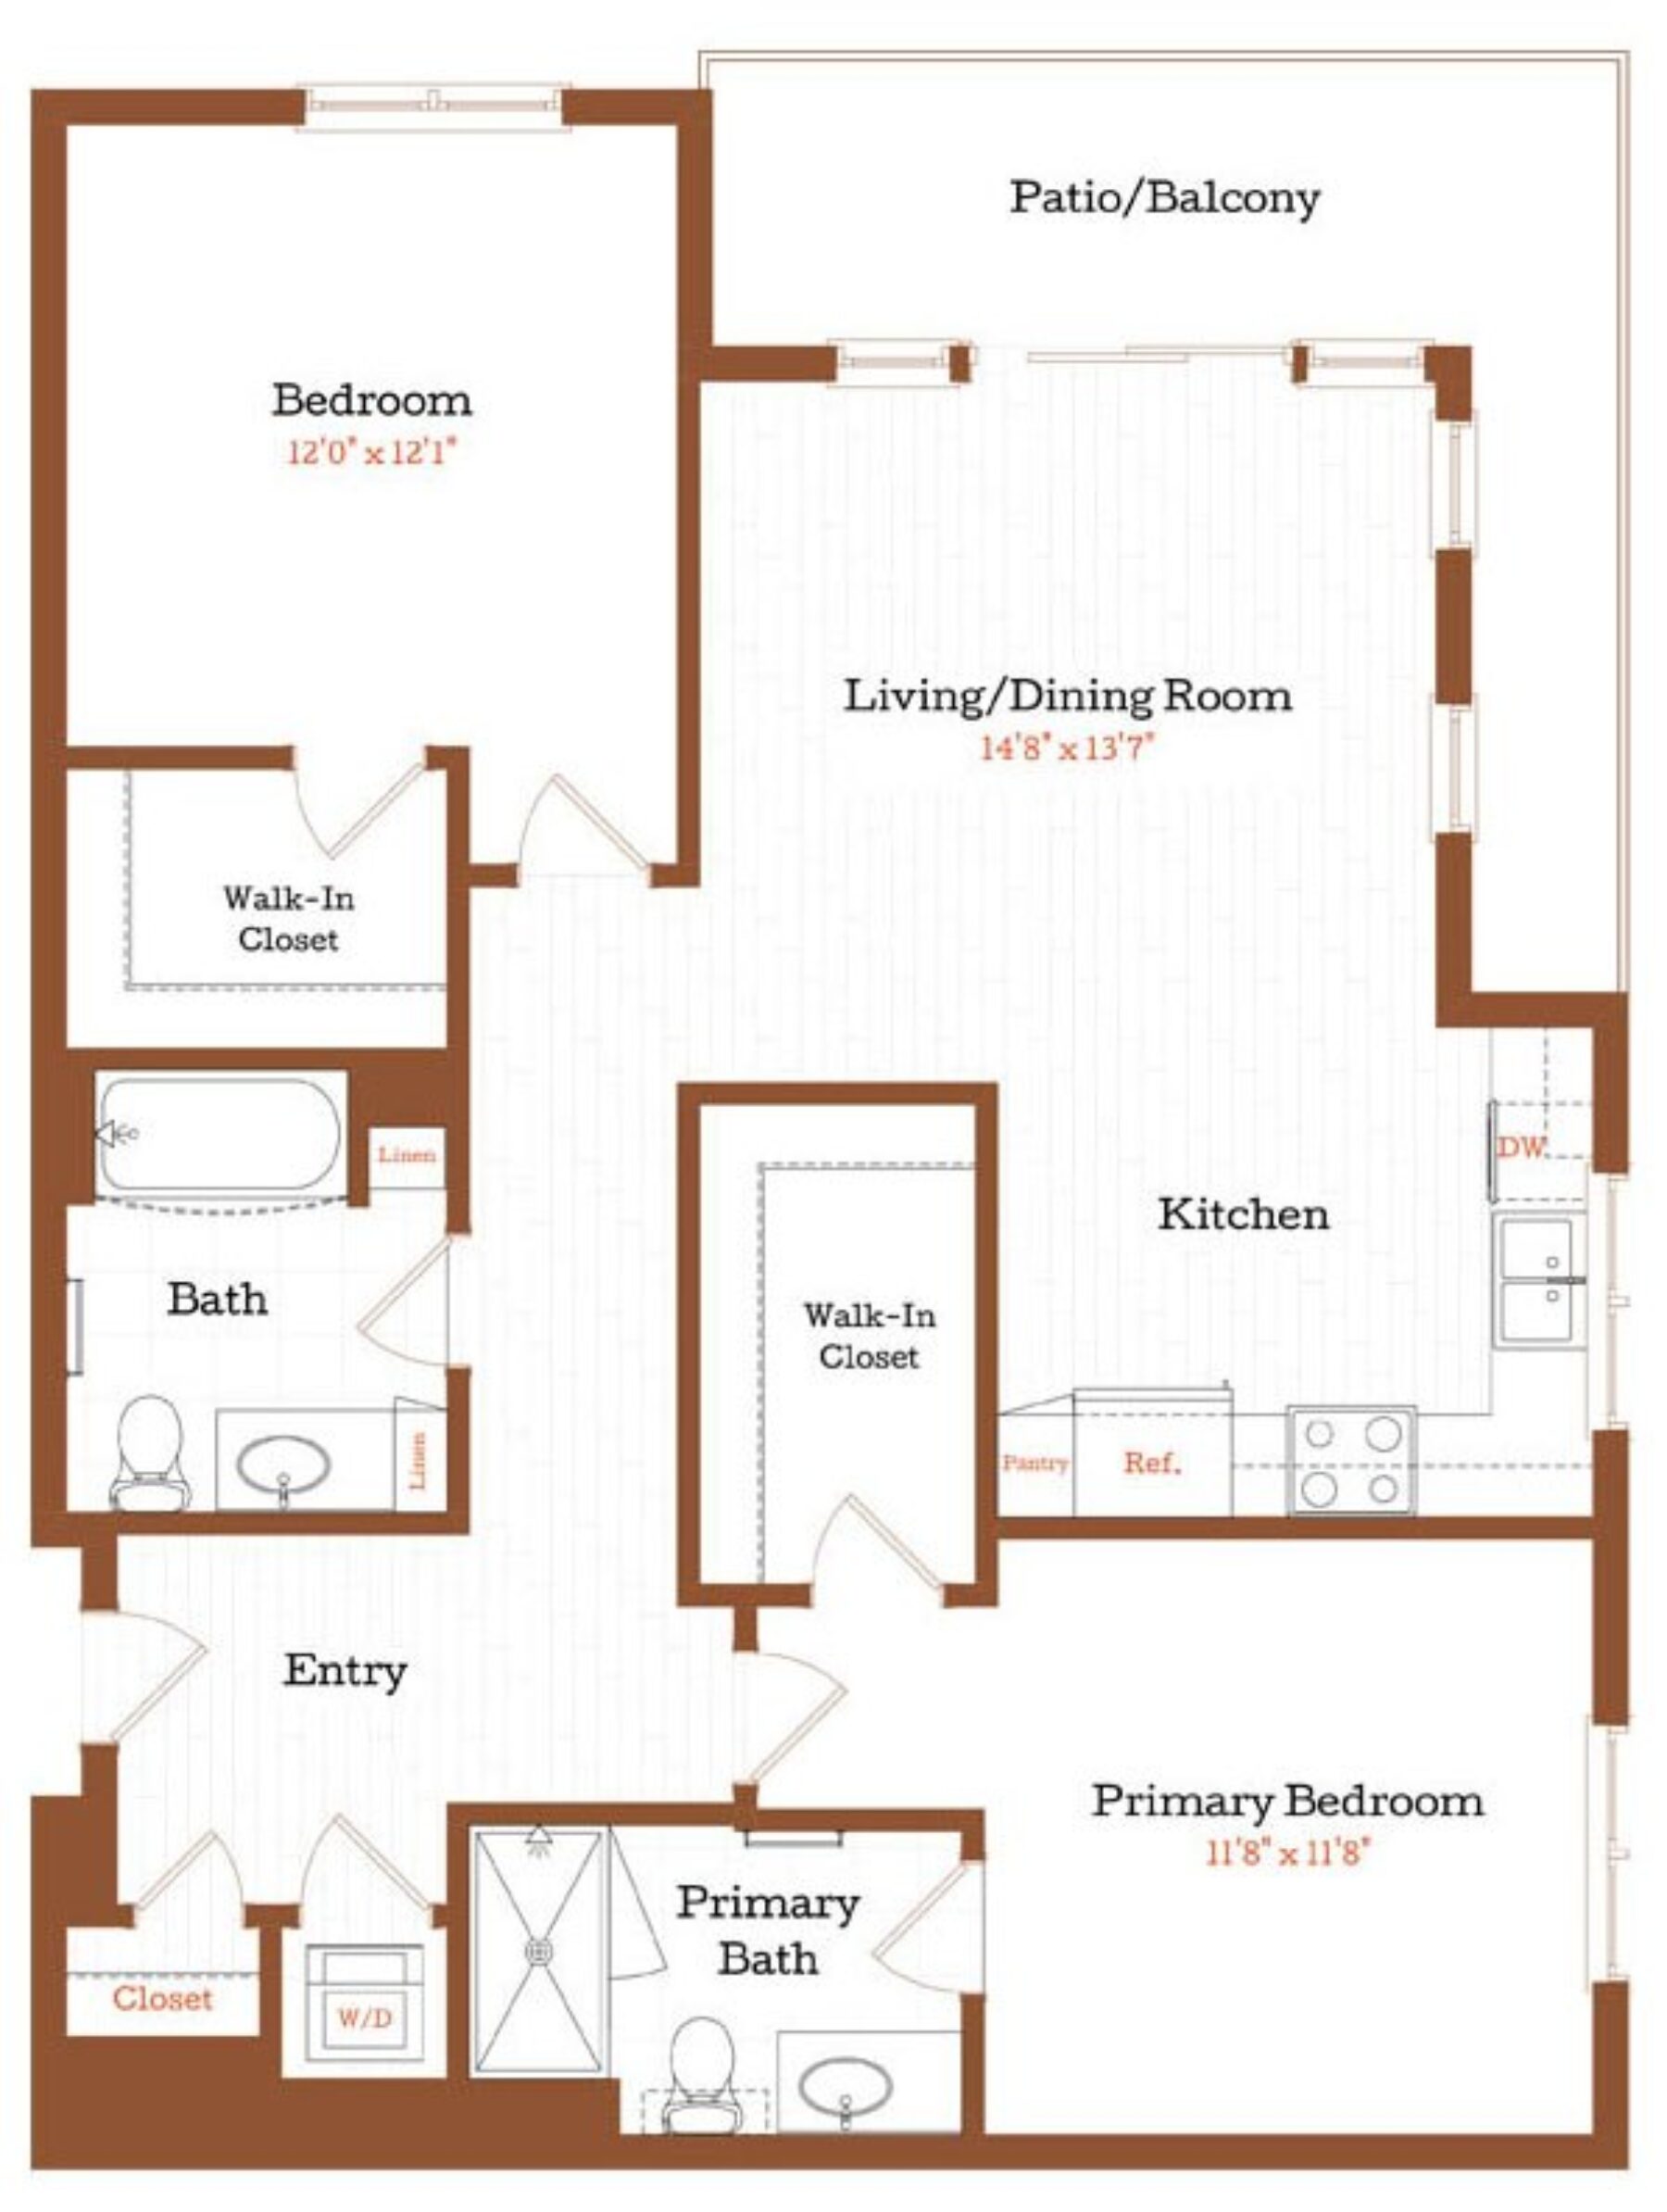 Plan Image: B2 - 2 Bedroom